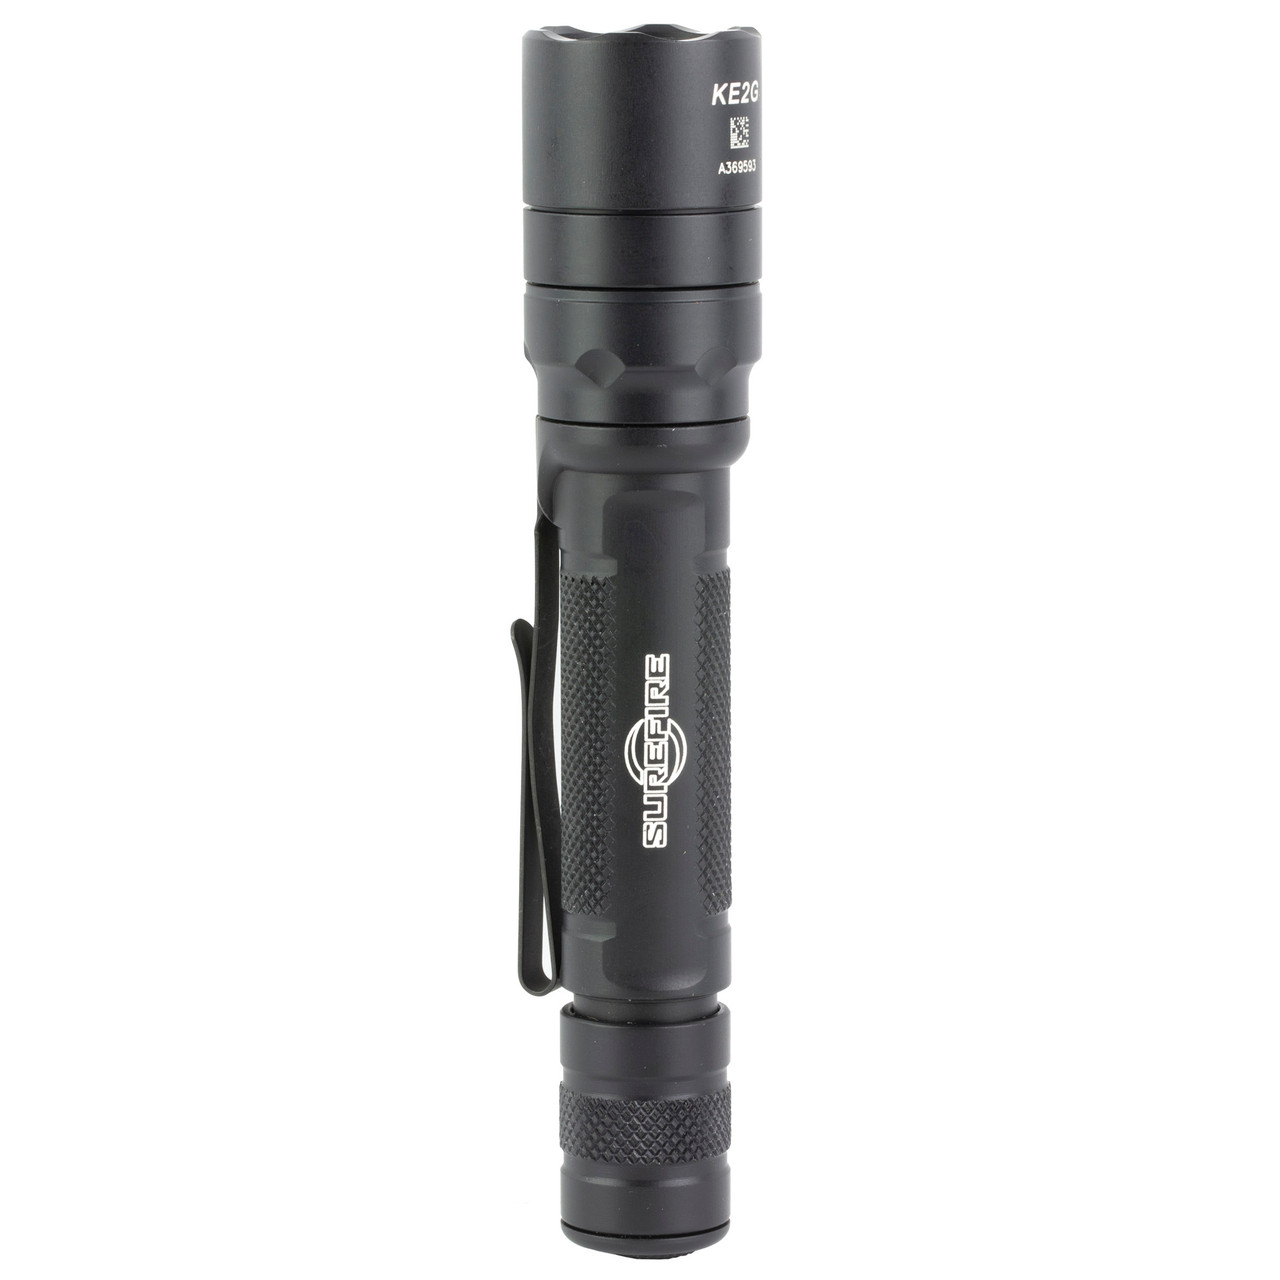 Surefire EDCL2-T Flashlight, 5/1200 Lumens, Black